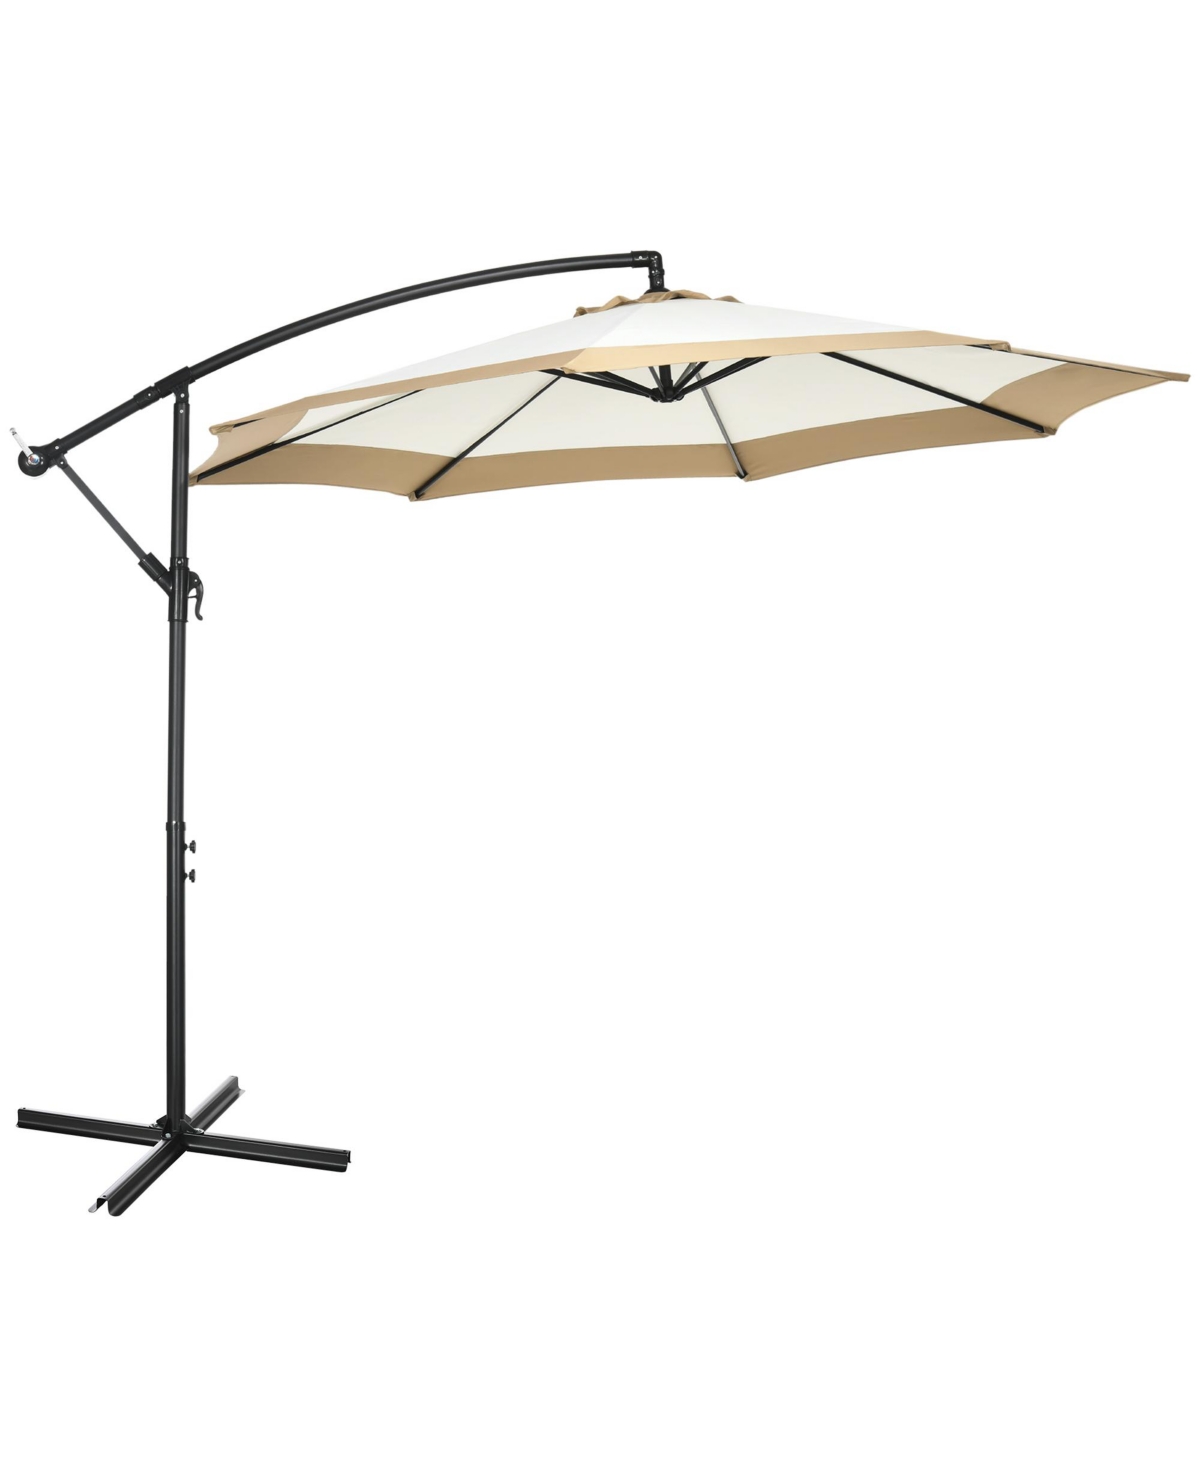 10FT Cantilever Umbrella, Offset Patio Umbrella with Crank and Cross Base for Deck, Backyard, Pool and Garden, Hanging Umbrellas, Tan - Tan